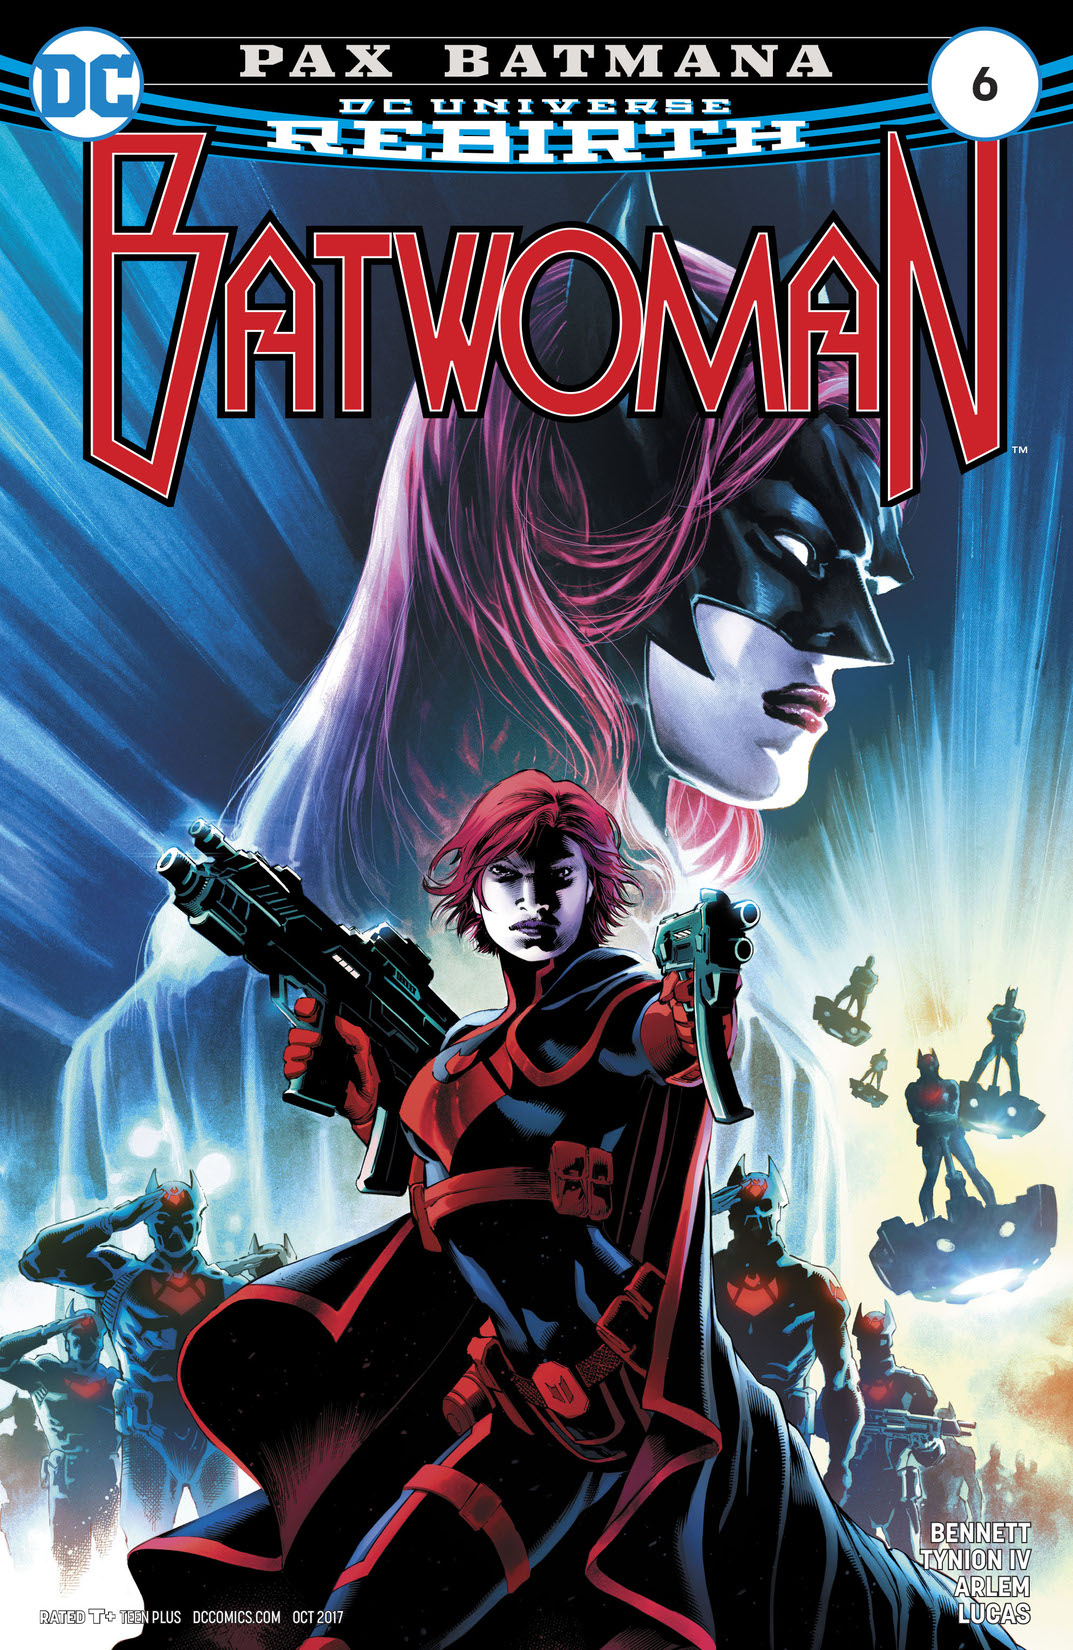 Batwoman (2017-) #6 preview images